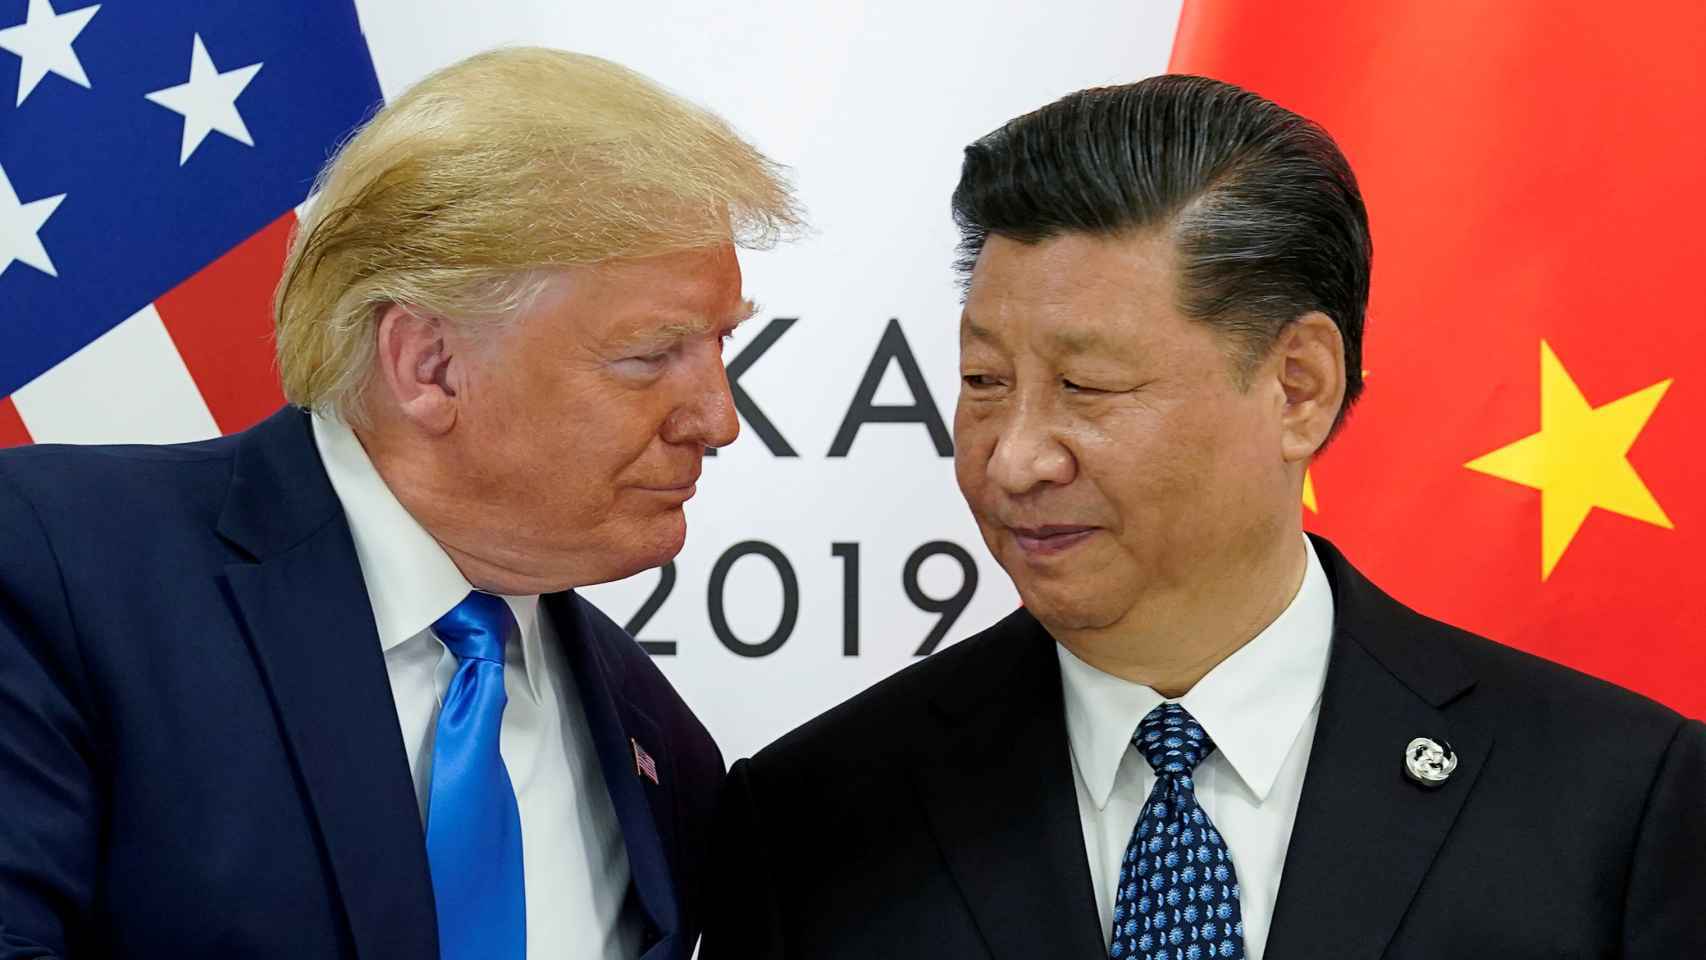 Xi Jinping y Donald Trump en la cumbre del G20 celebrada en junio en Osaka, Japón